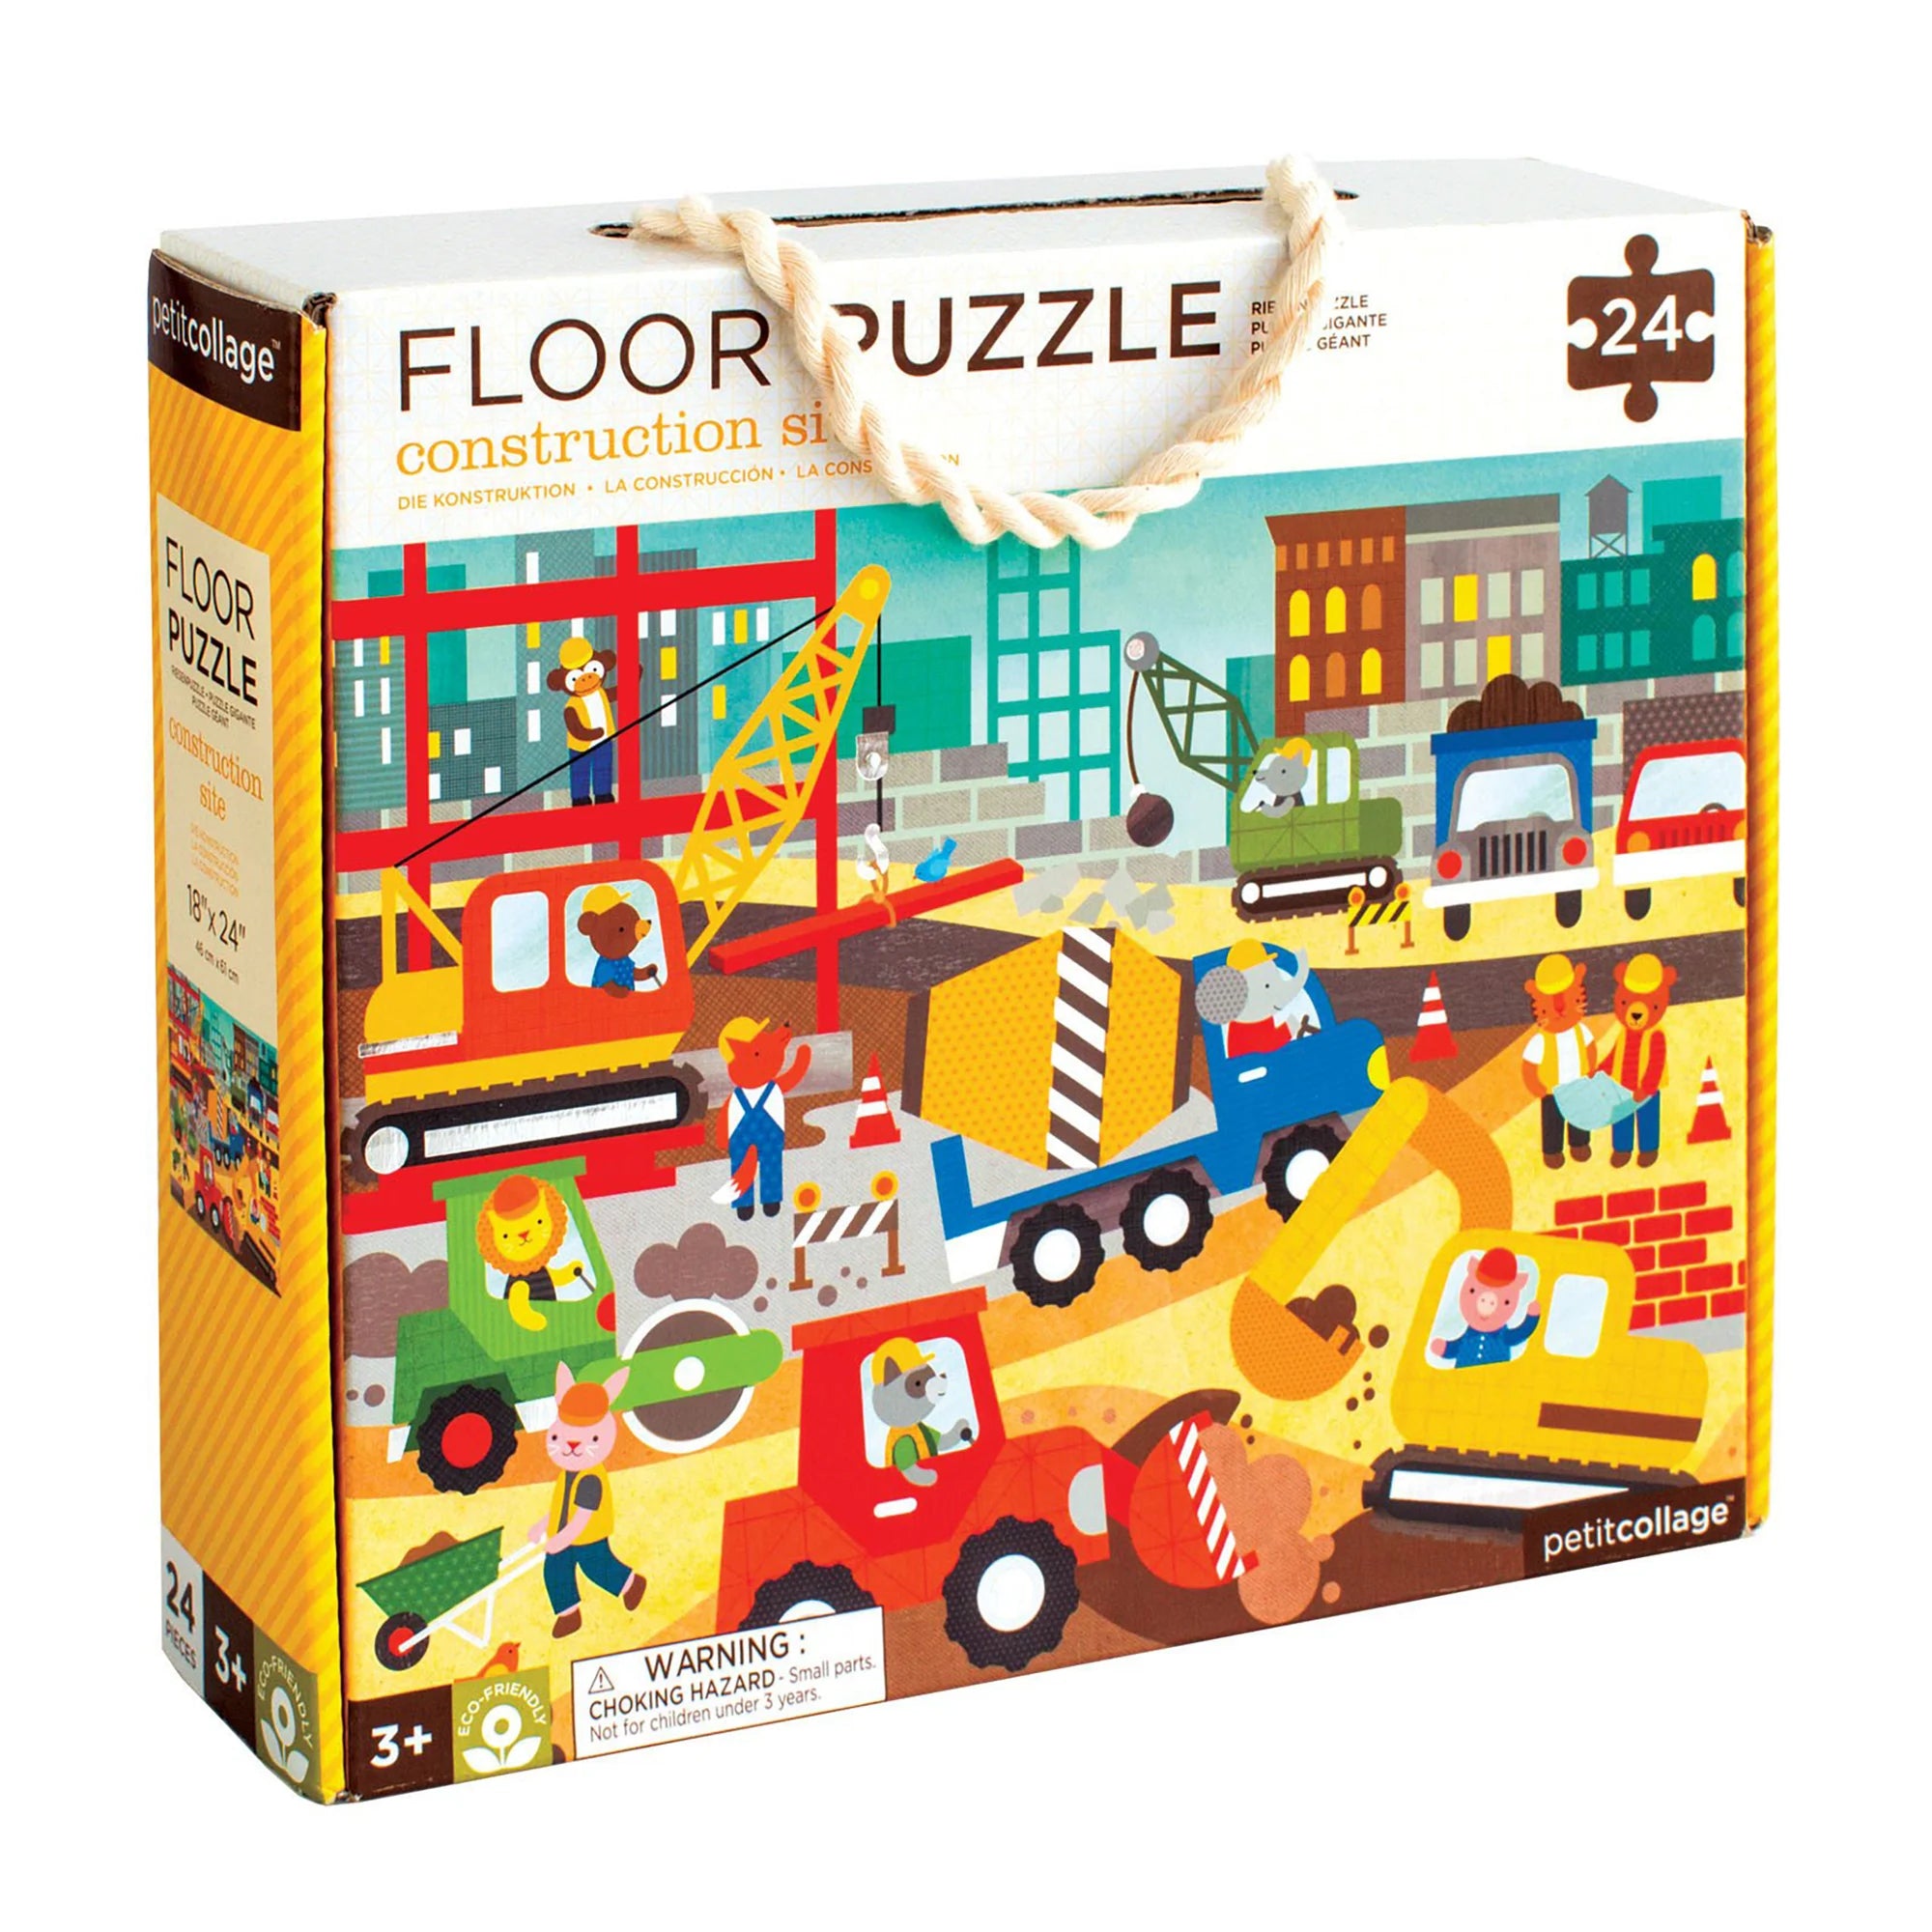 Floor Puzzle - Construction